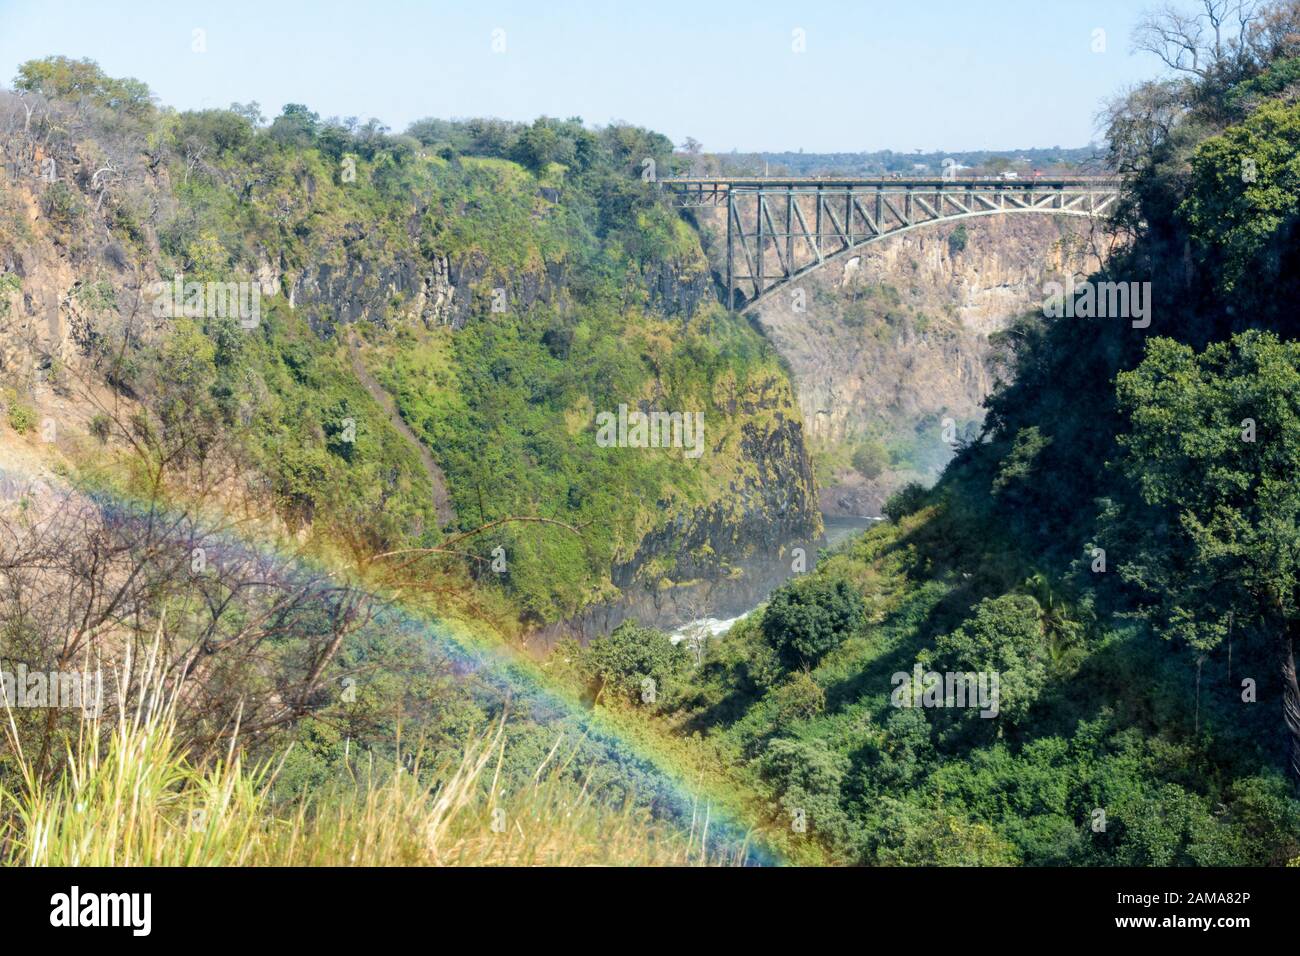 The Victoria Falls bridge over the Zambezi river between Zimbabwe and Zambia, with rainbow Stock Photo